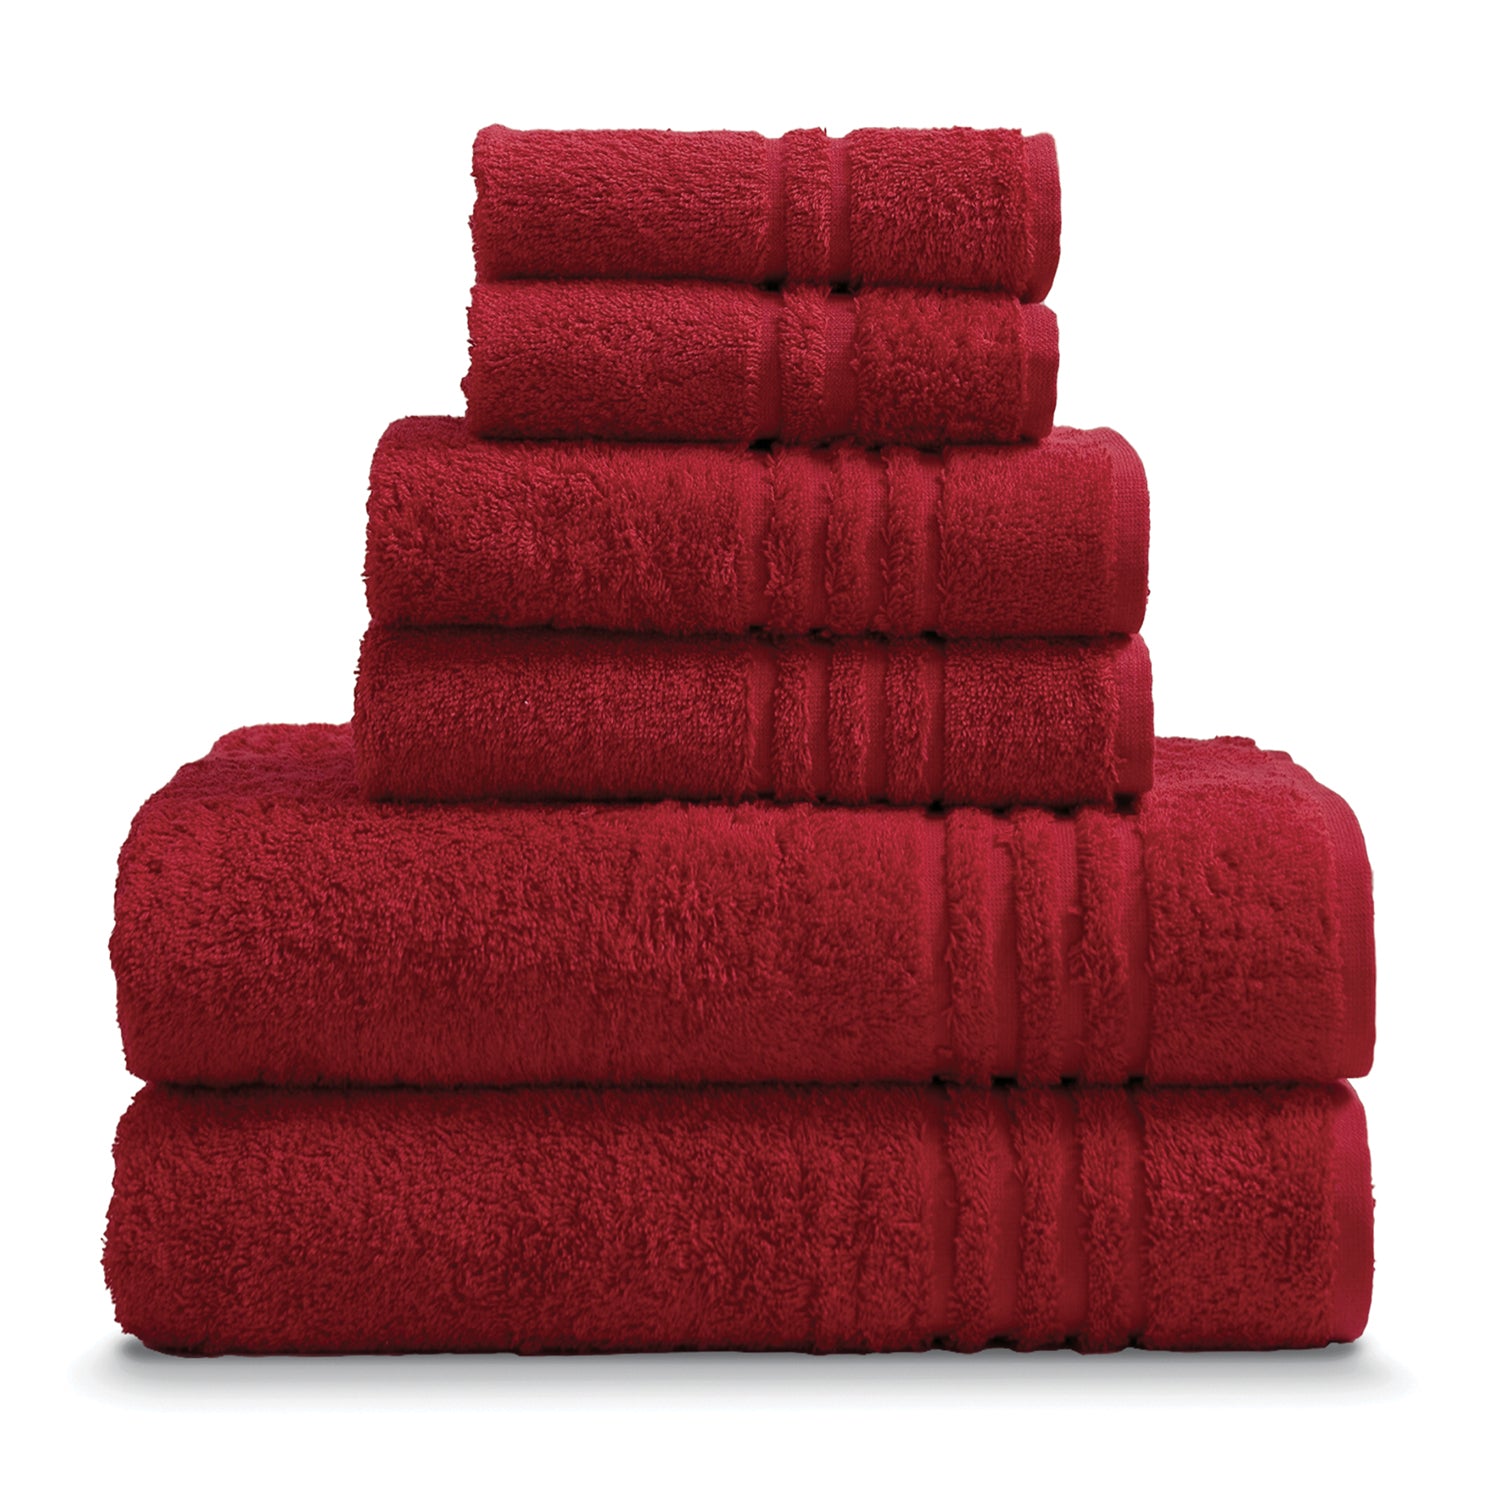 ClearloveWL Bath towel, 3pcs Cotton Towel Set +1 Bath Towels Bathroom Set  For Family Guest Bathrooms Gym Home Hotel Towels (Color : Chocolate)